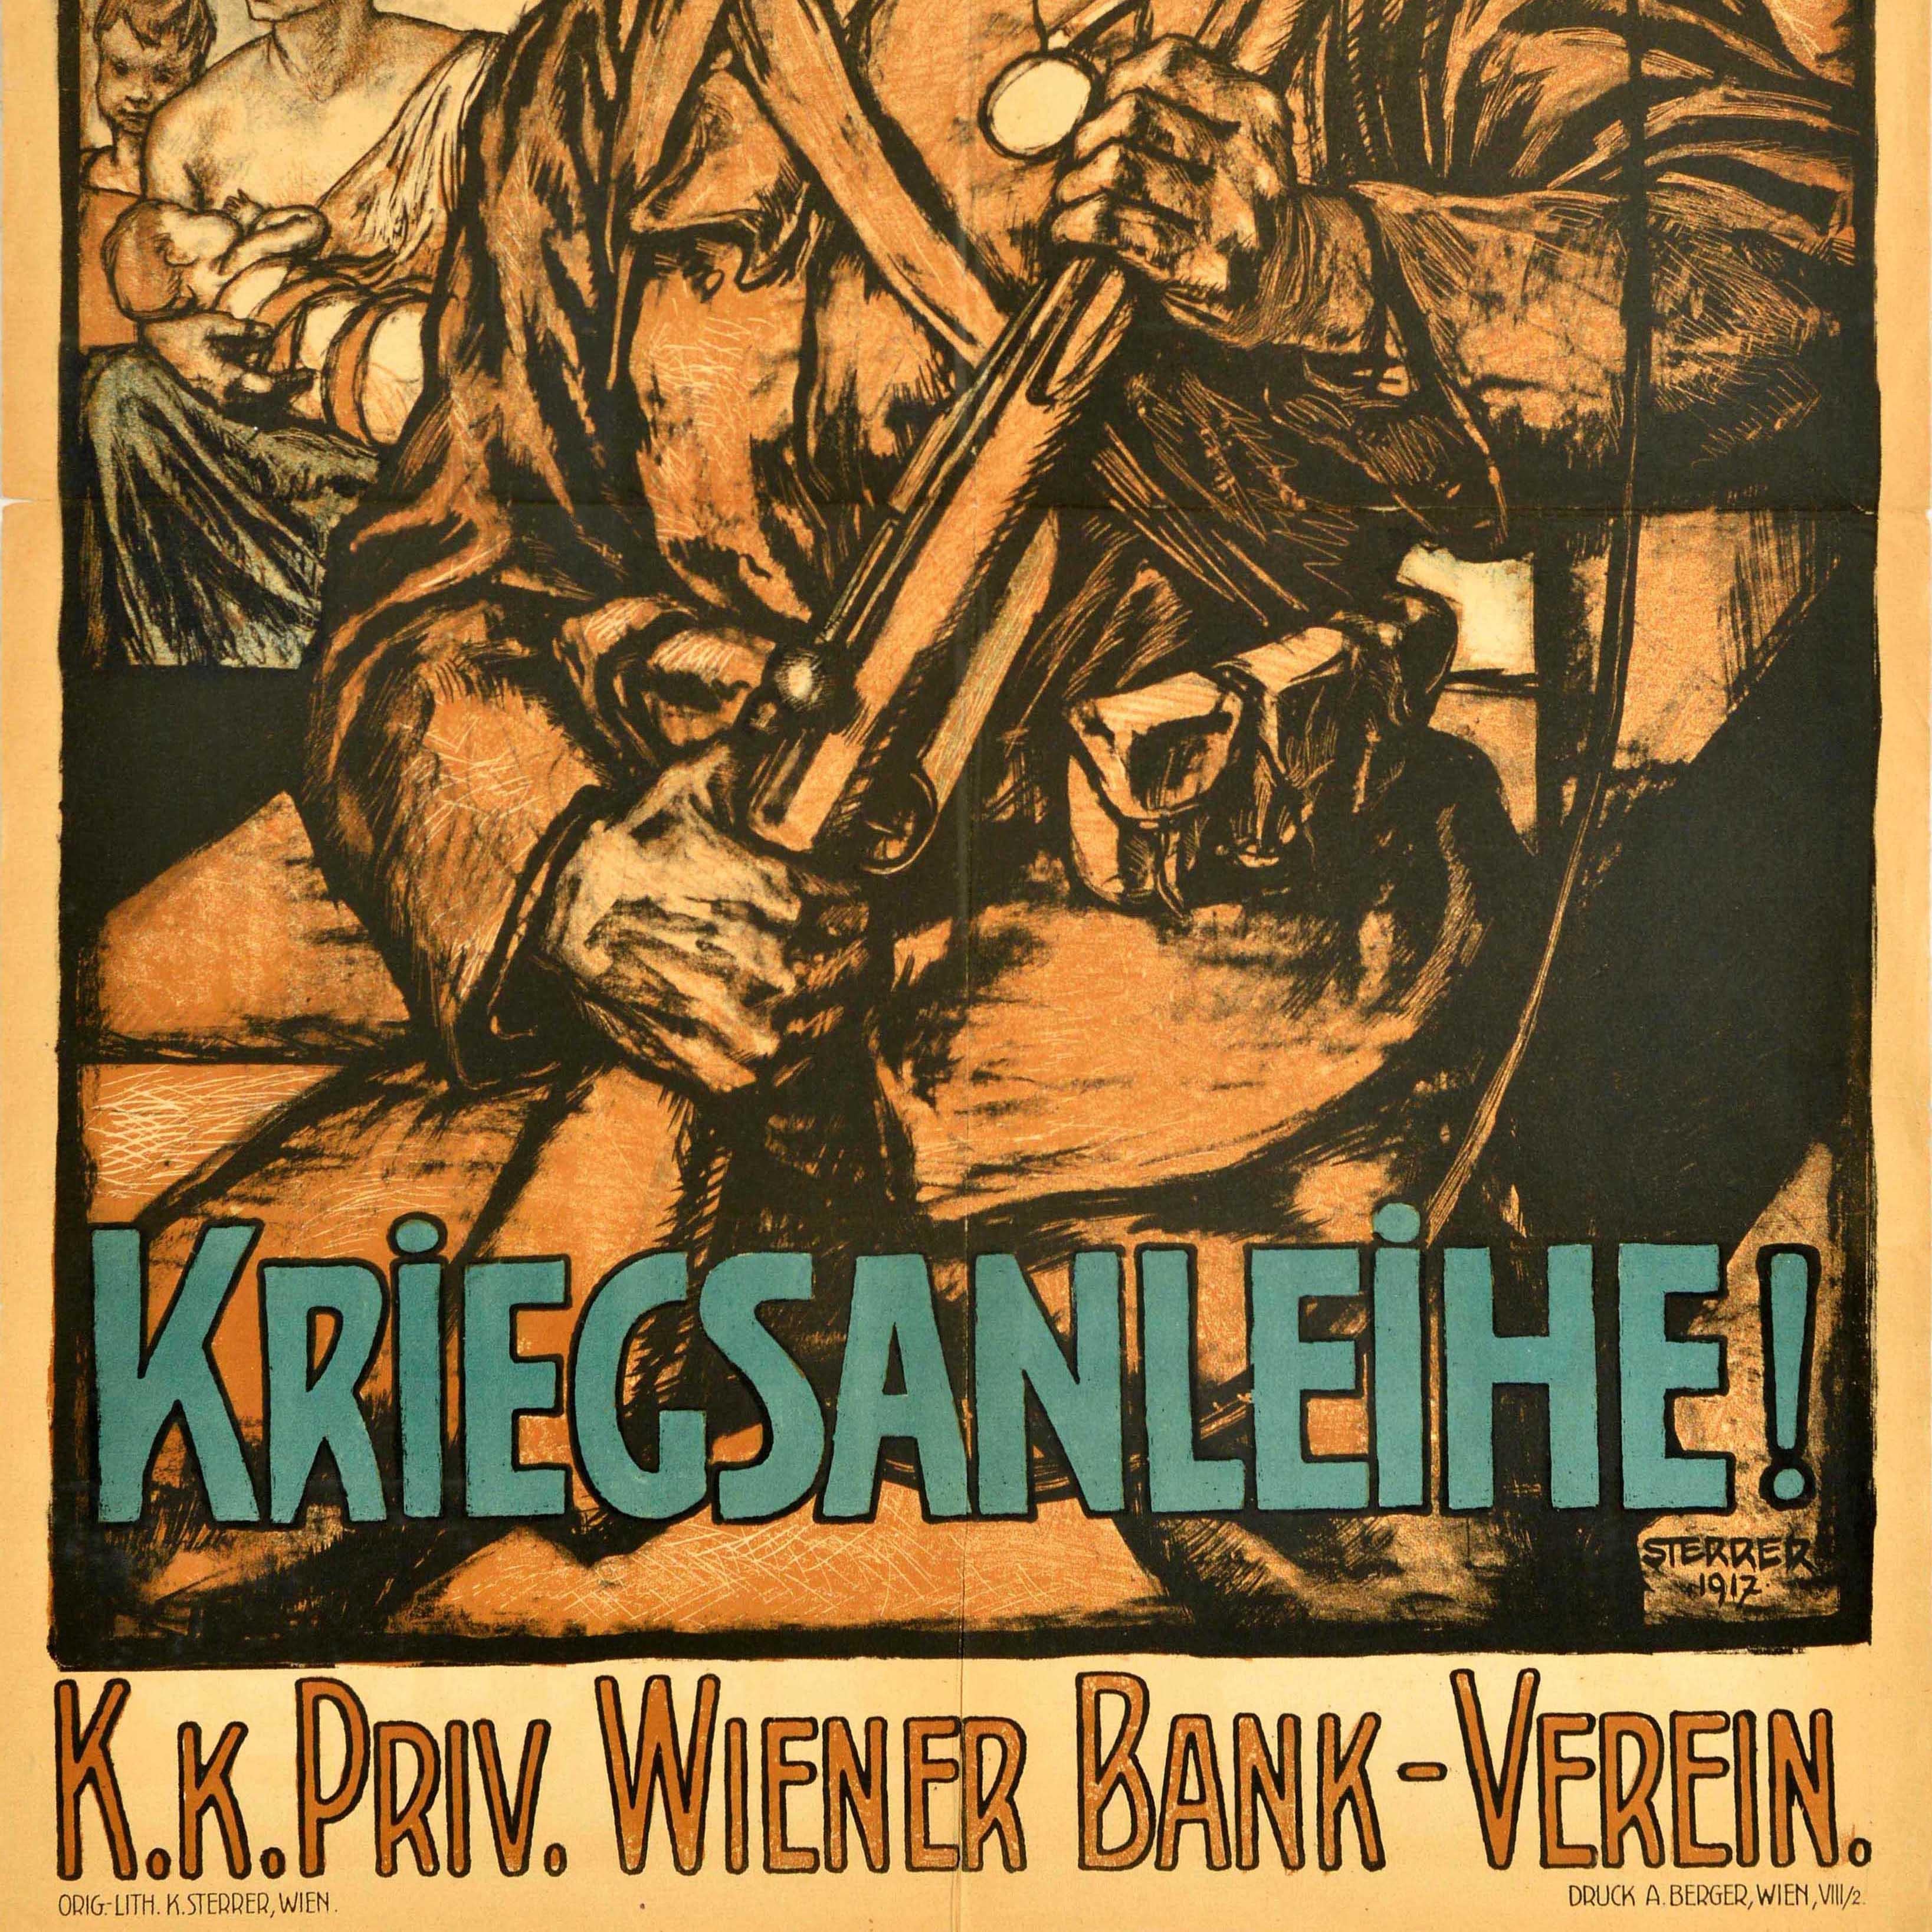 austria-hungary ww1 propaganda posters